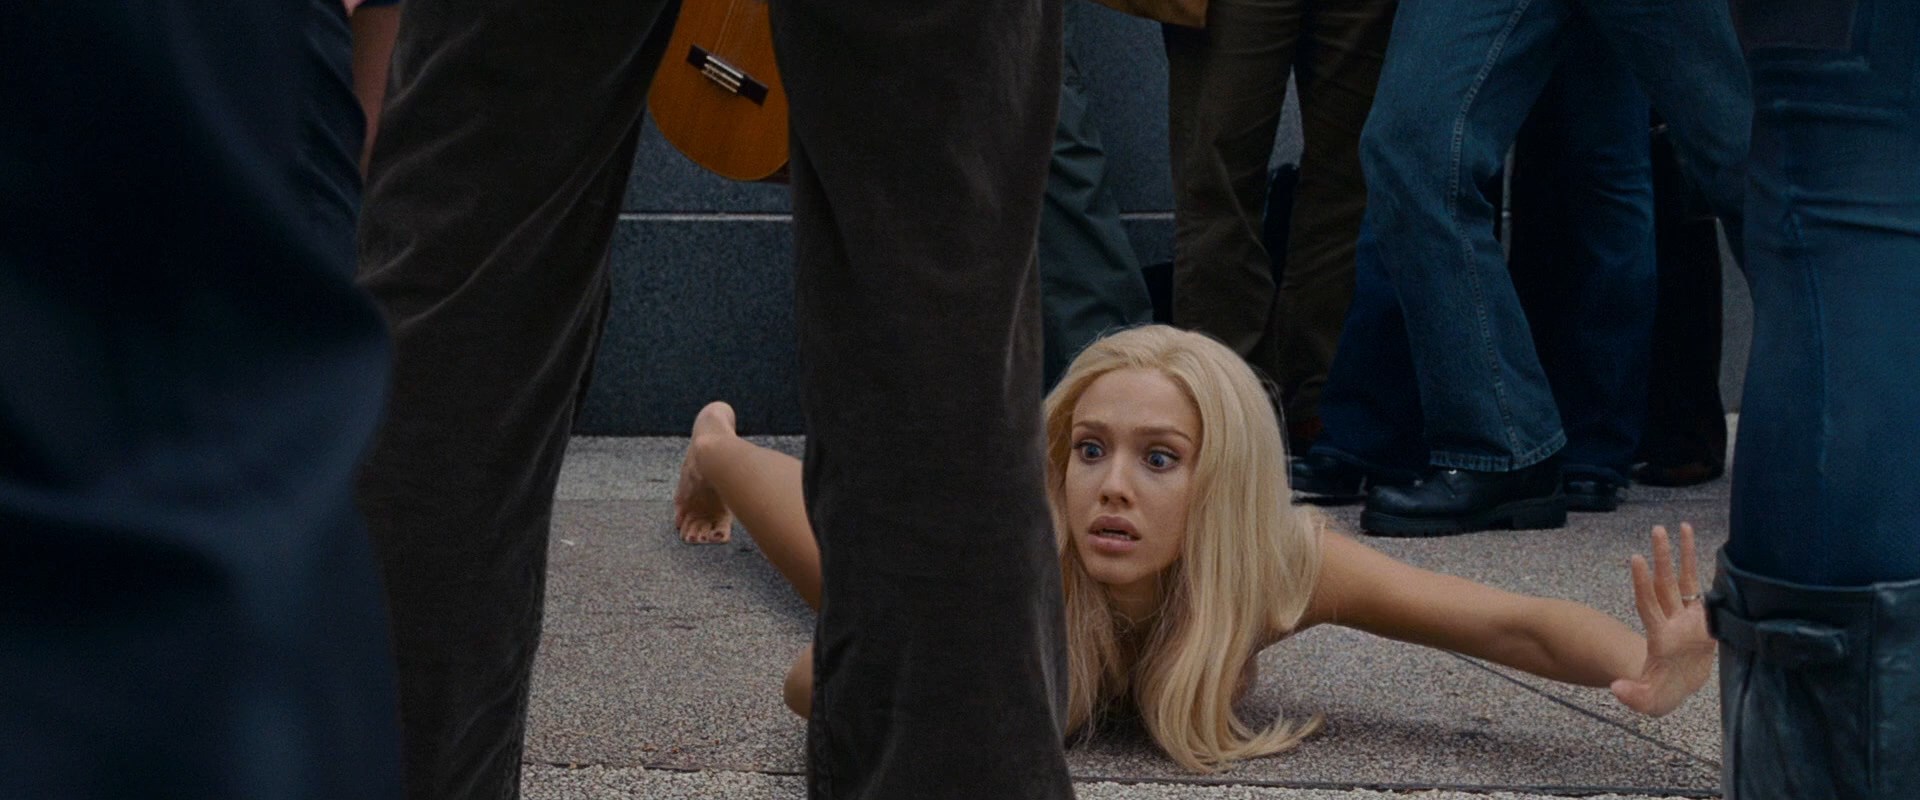 Jessica Alba Nude Scene in Fantastic Four Film.